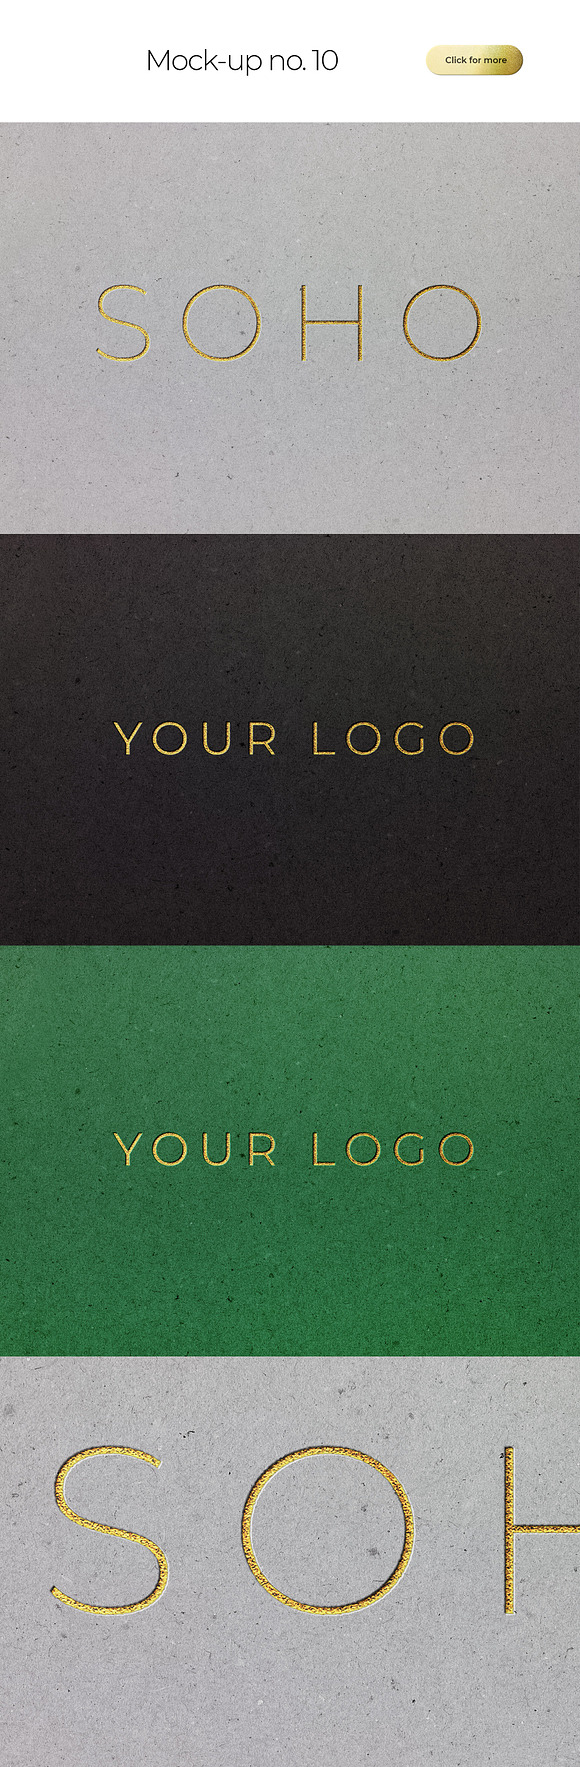 50 logo mockup branding bundle in Branding Mockups - product preview 11